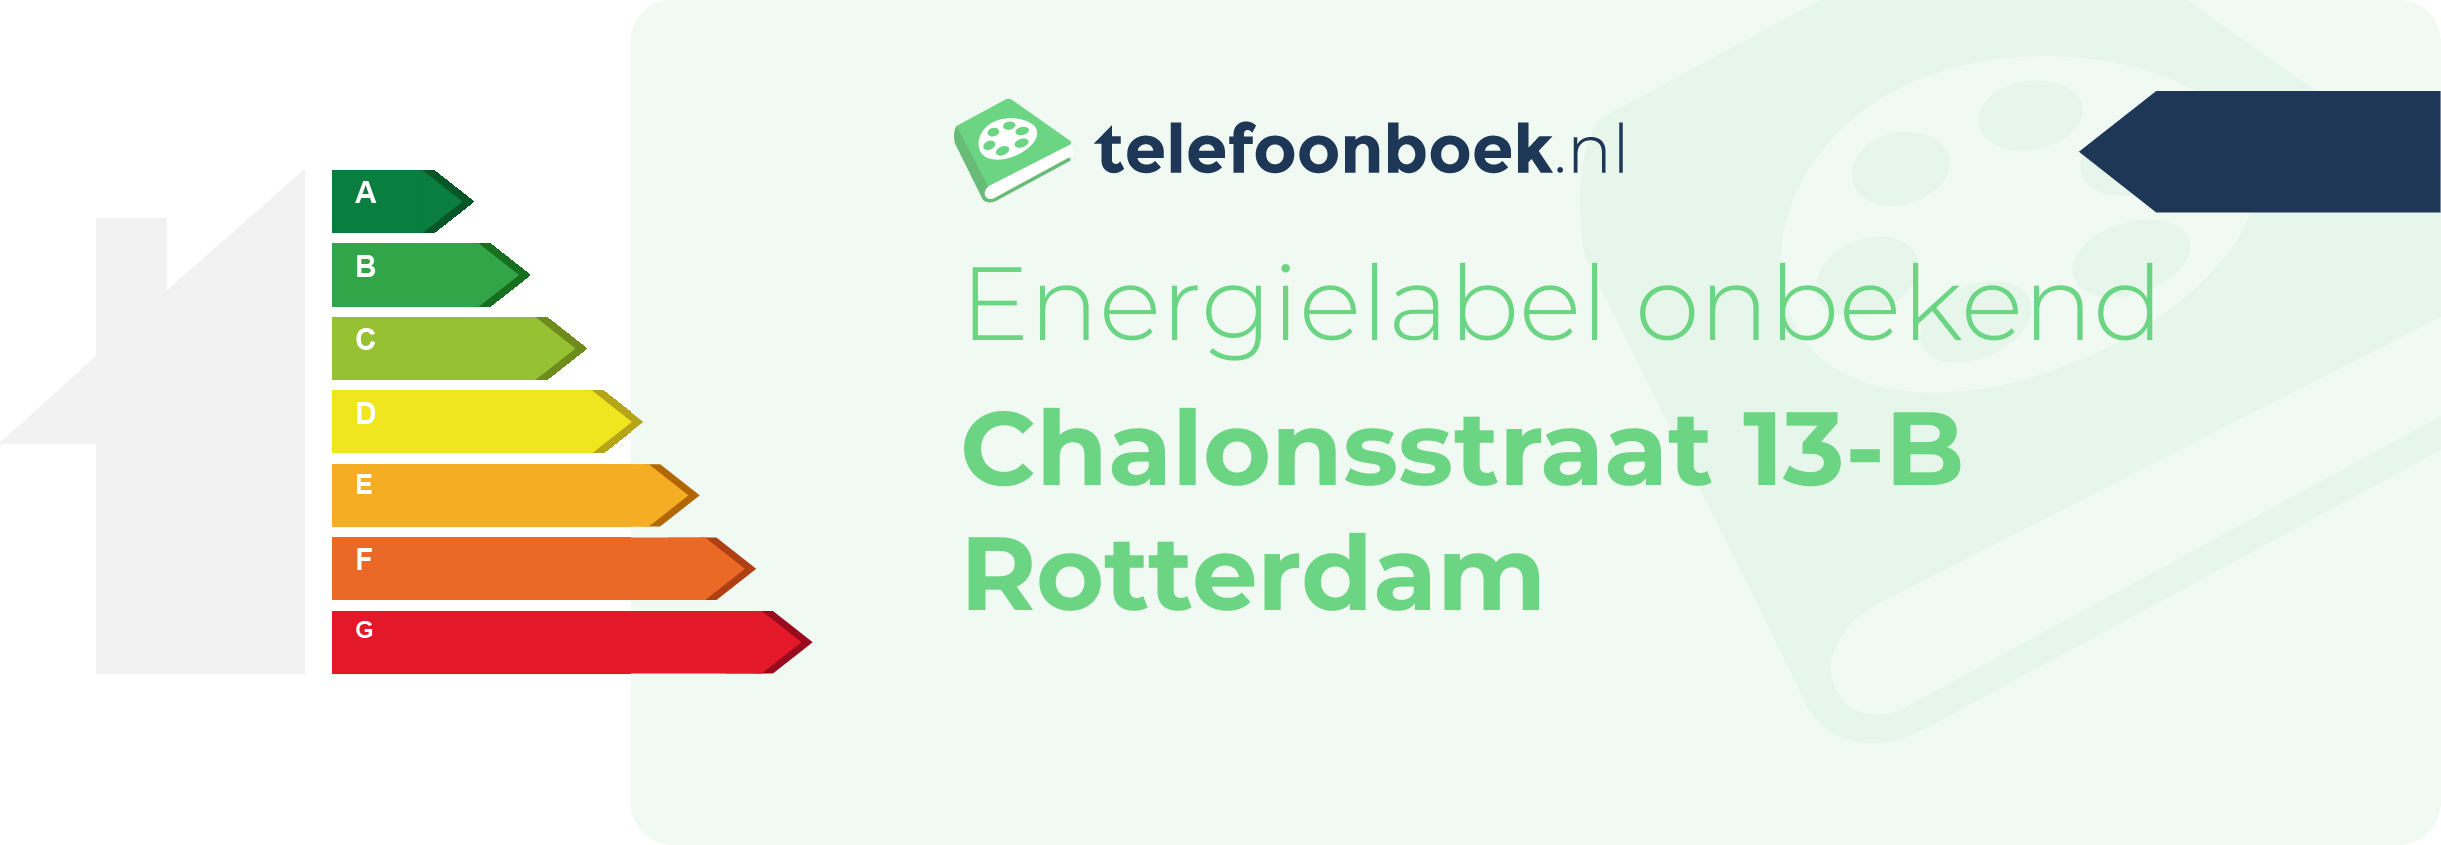 Energielabel Chalonsstraat 13-B Rotterdam